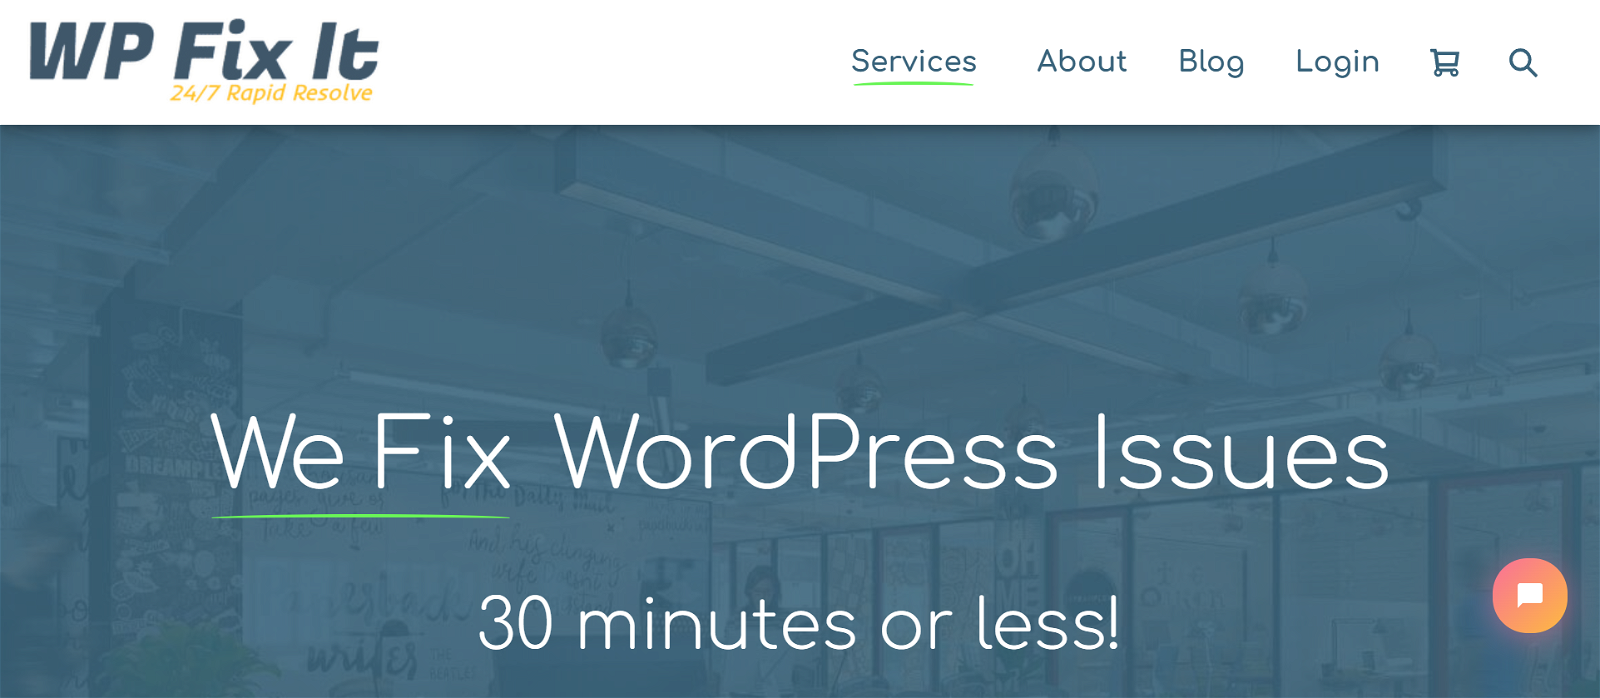 WP Fix IT WordPress services